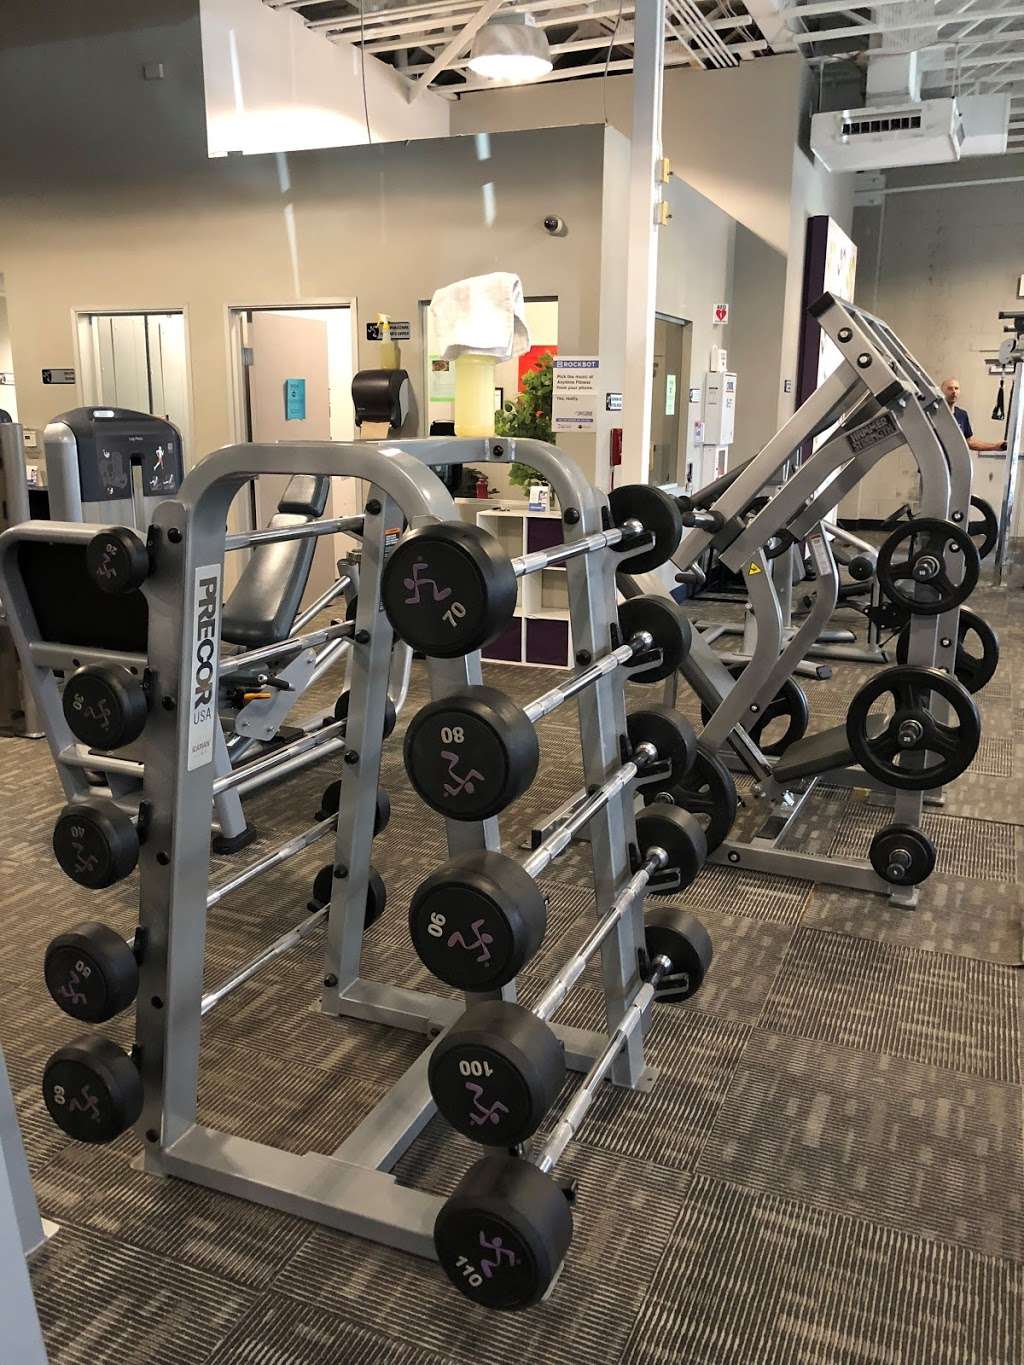 Anytime Fitness Lakewood Colorado | 2585 S Lewis Way, Lakewood, CO 80227, USA | Phone: (303) 986-1632